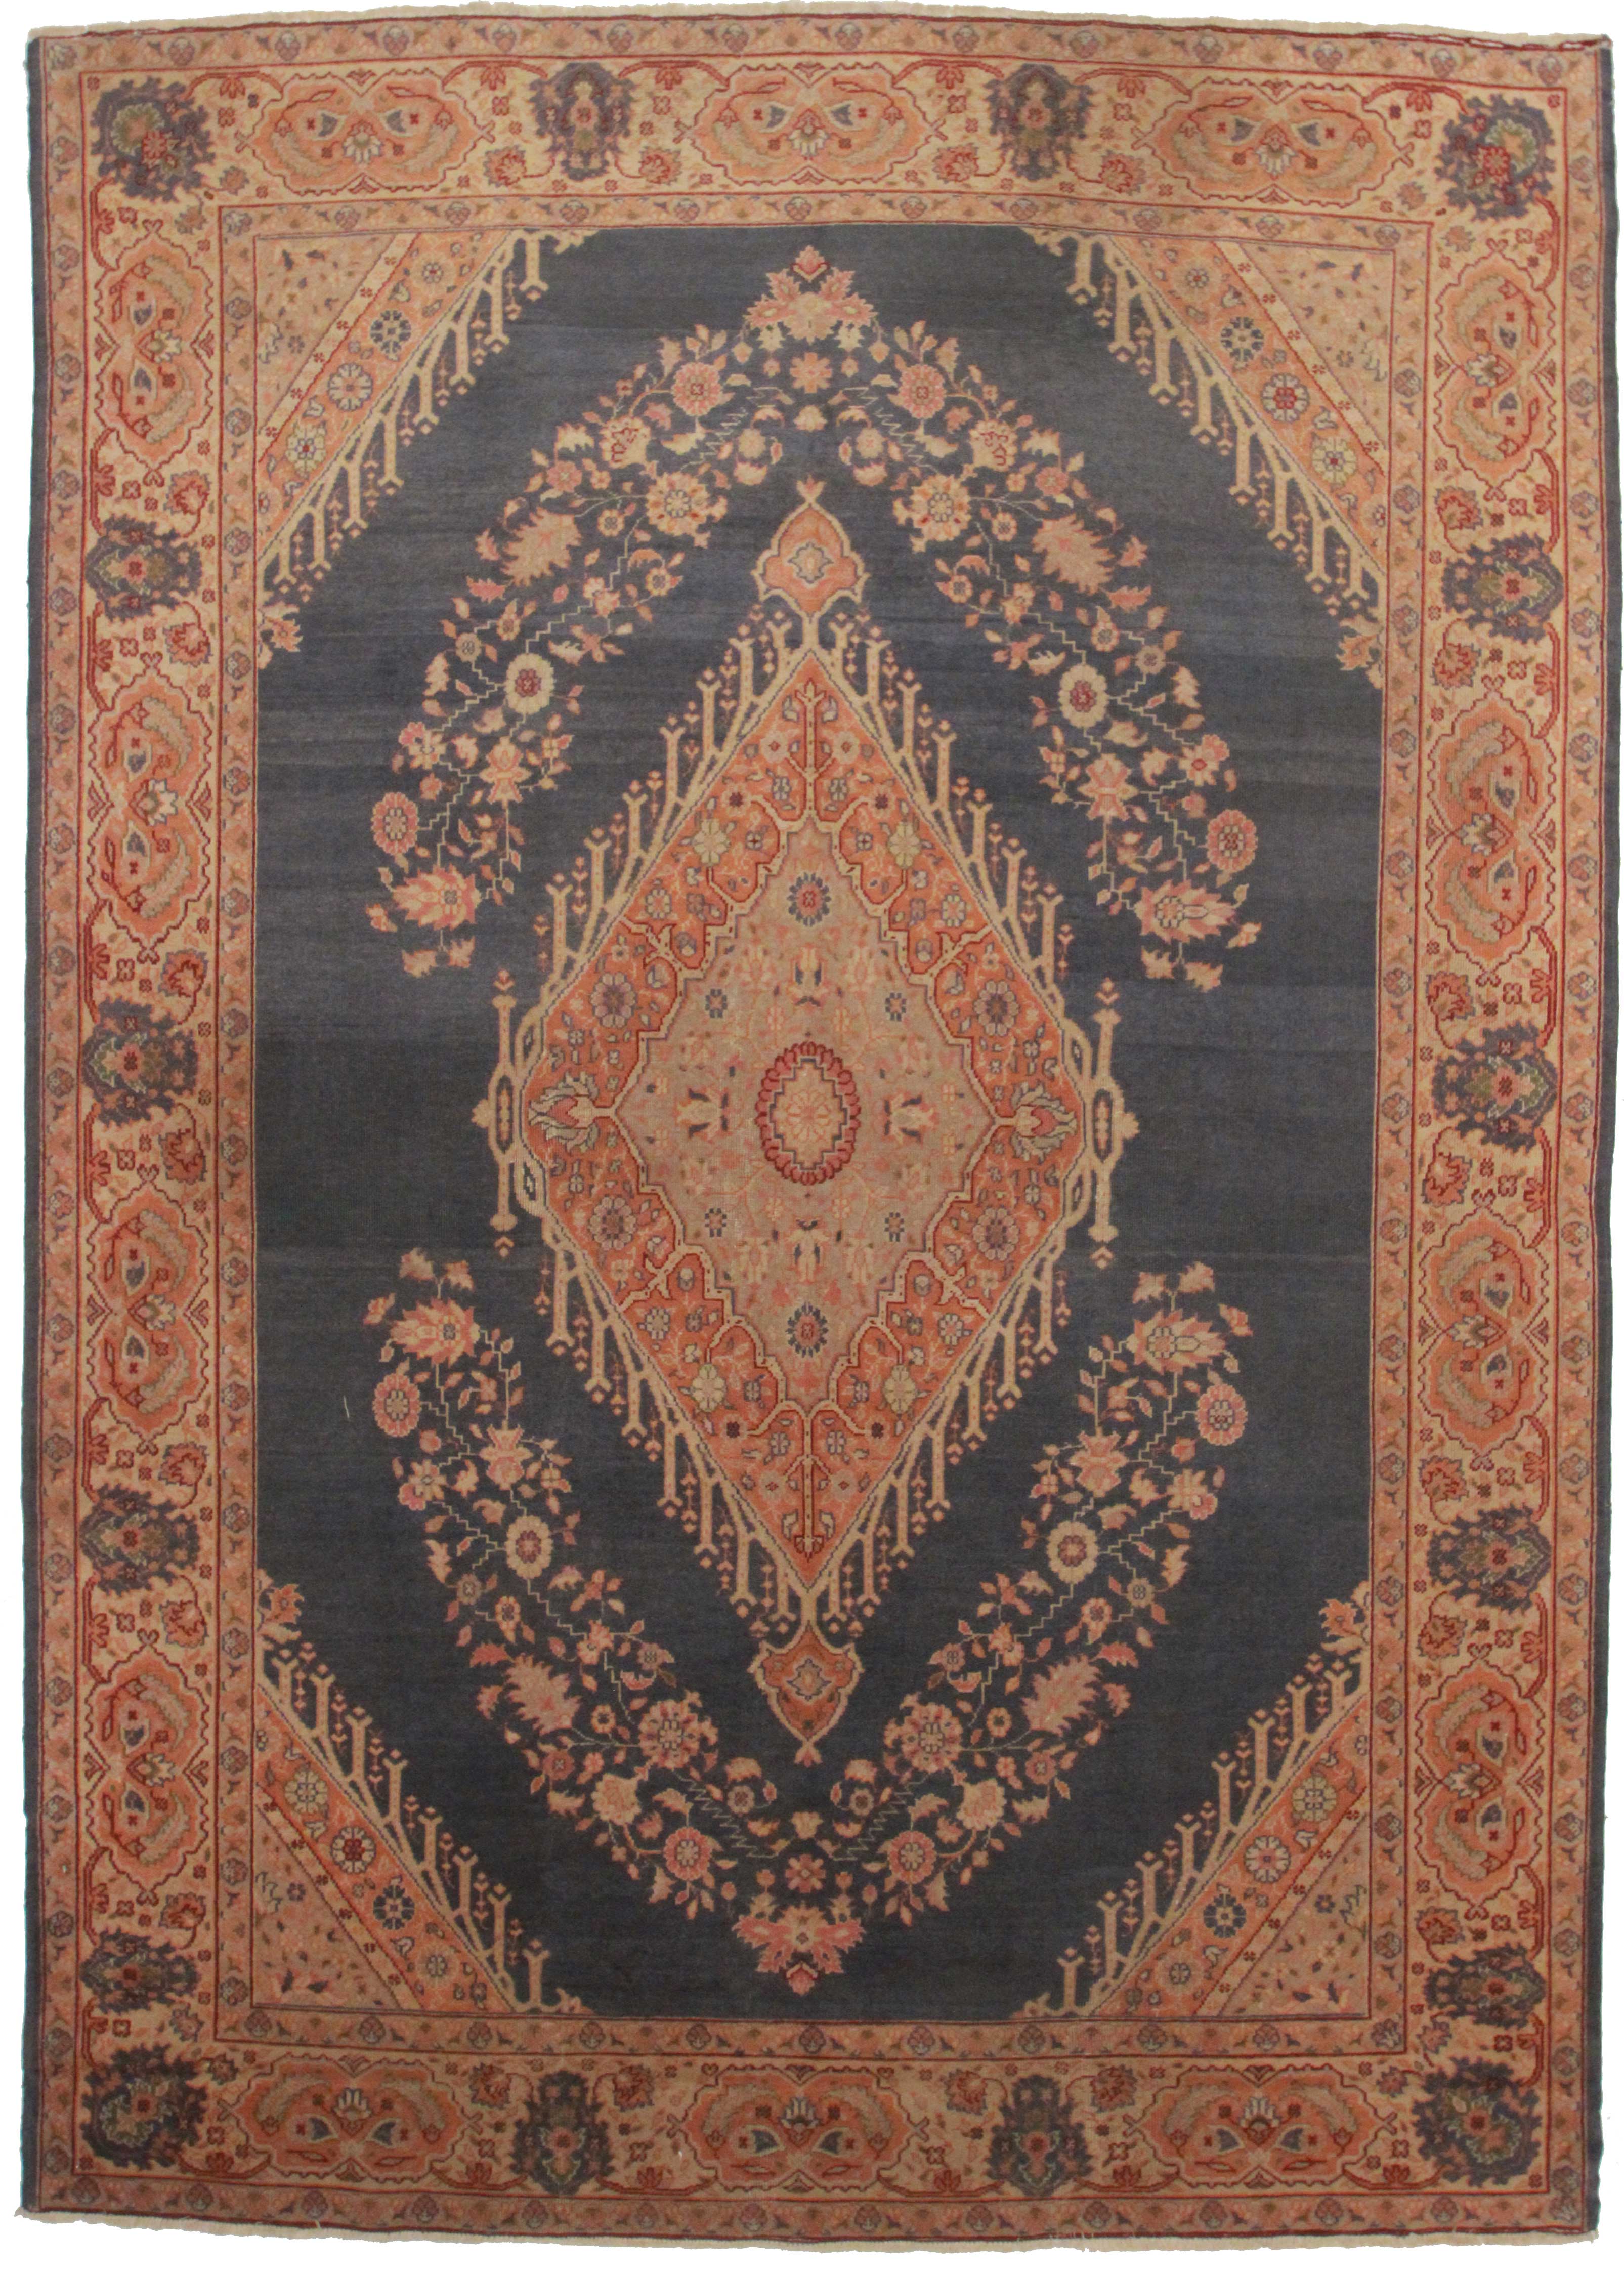 8 x 11 Antique Turkish Oushak Rug | Exclusive Oriental Rugs